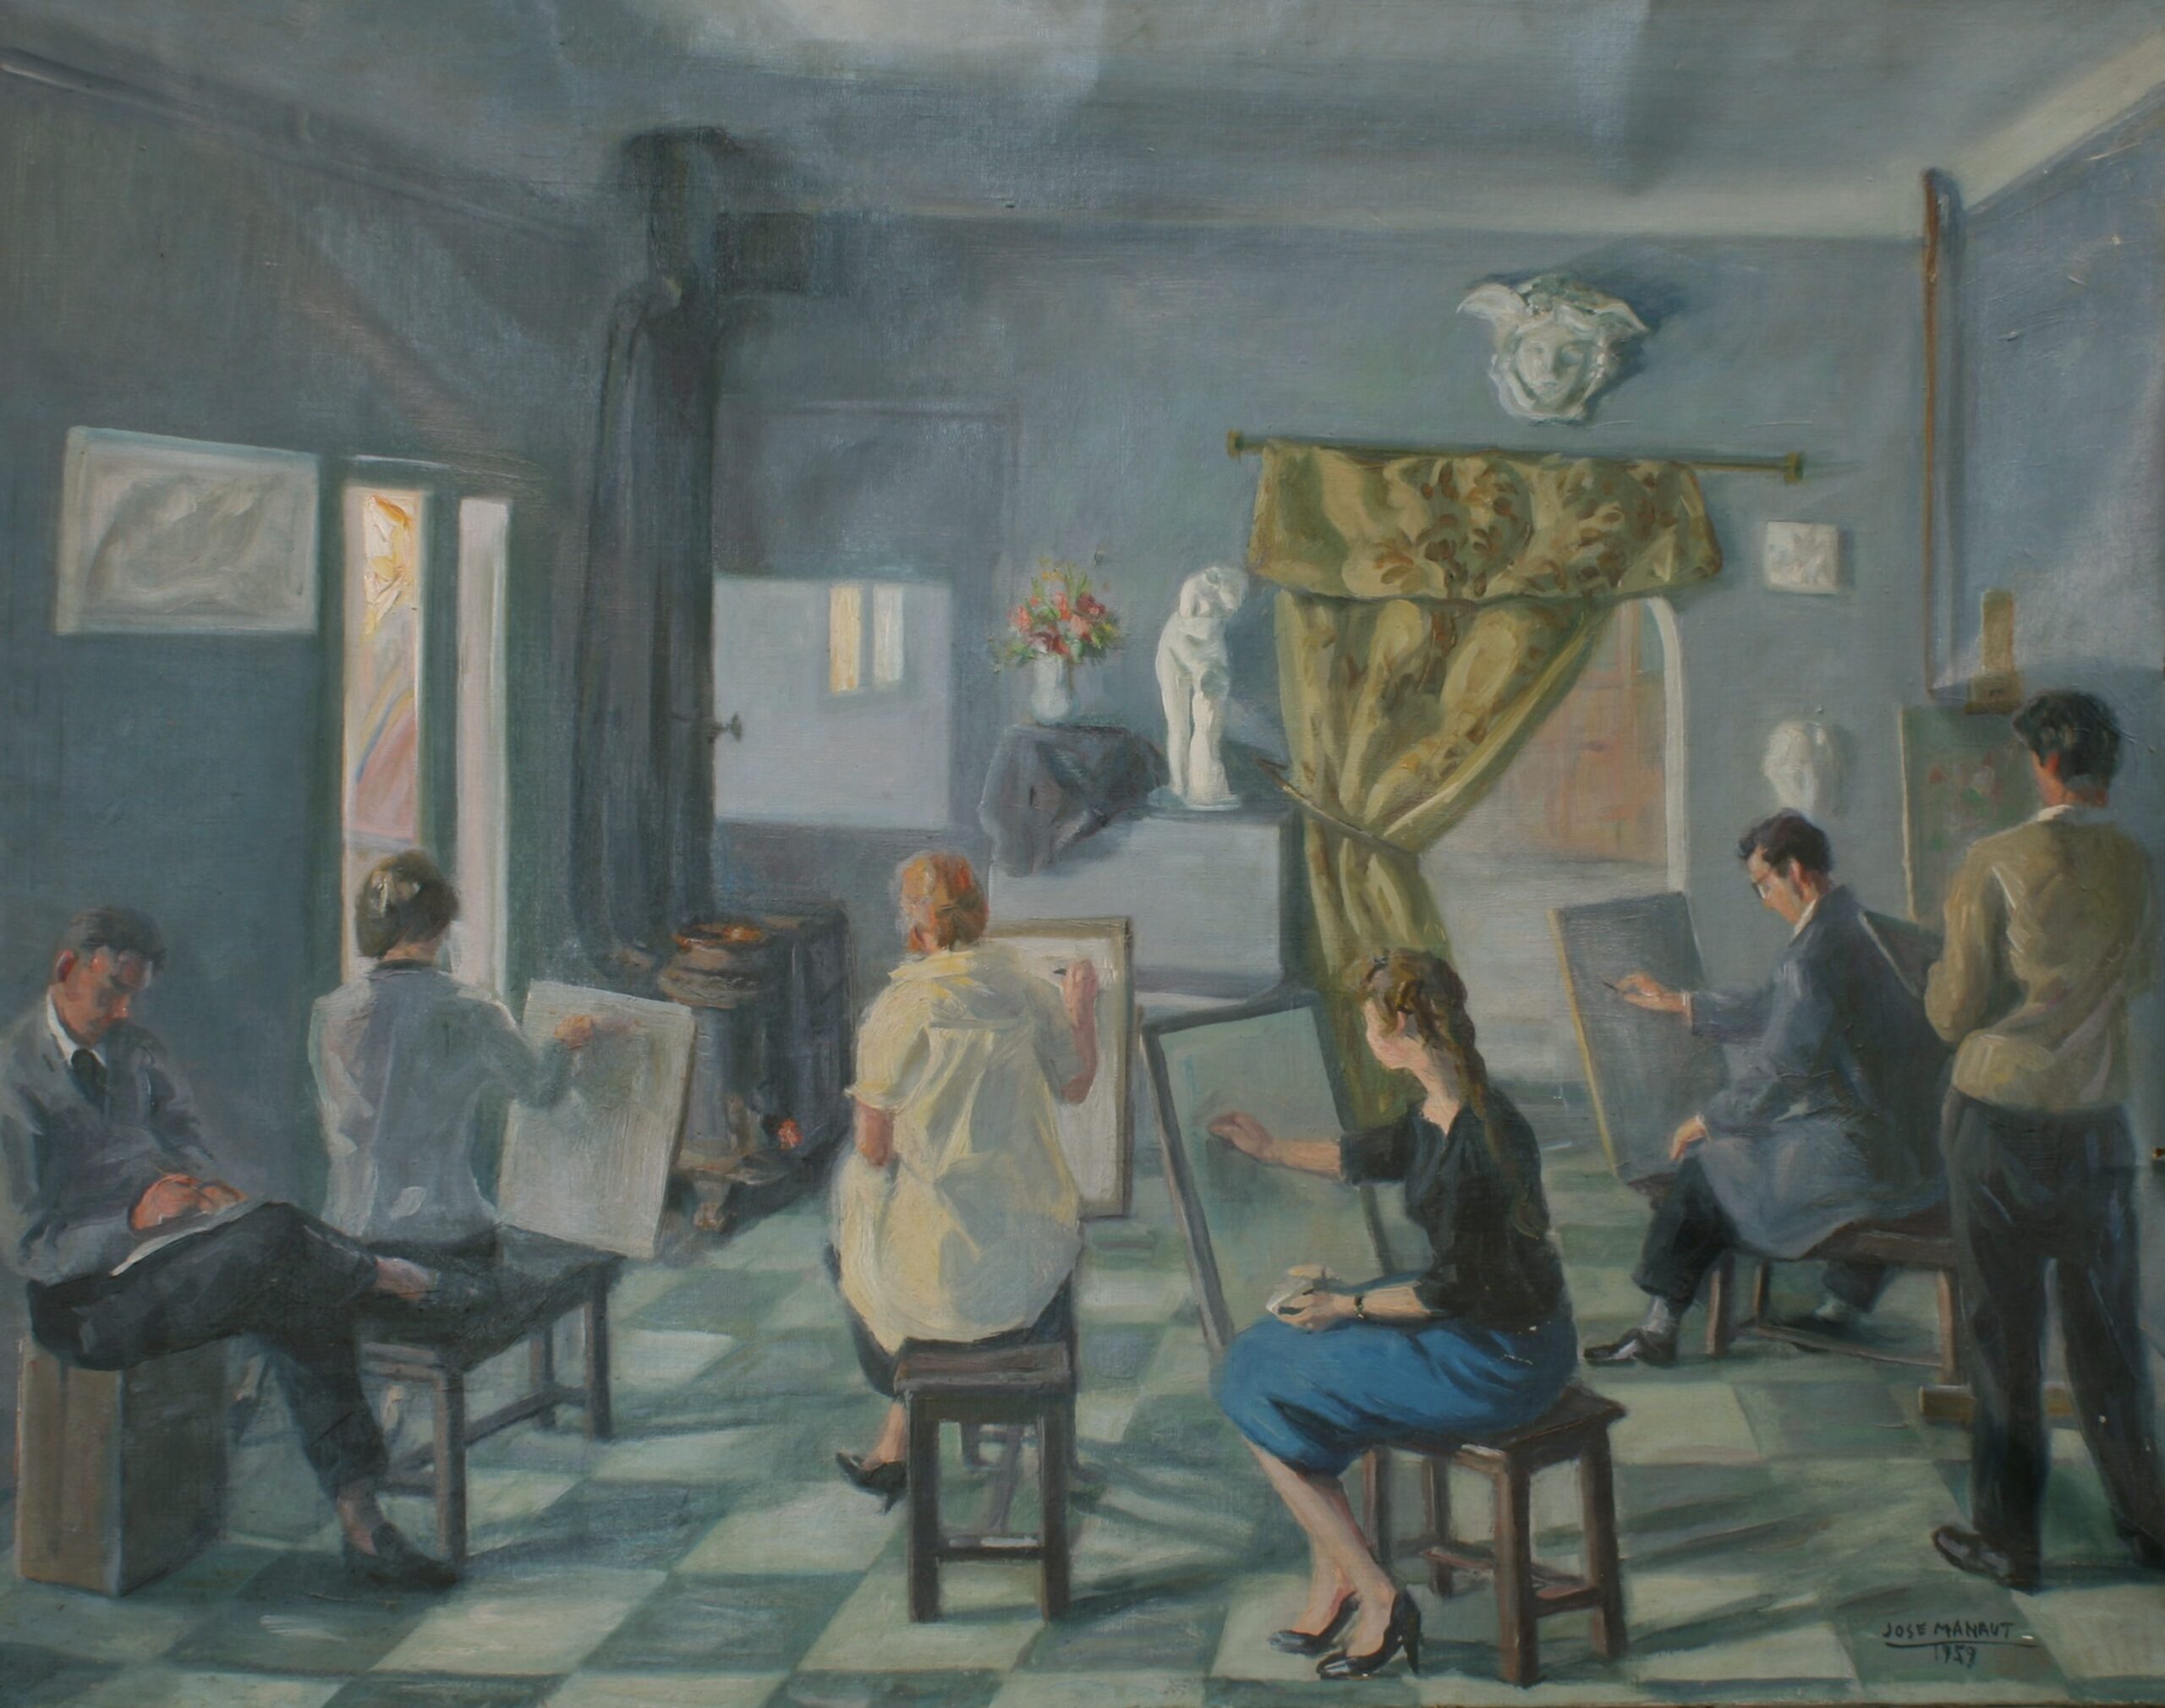 Pintura de José Manaut titulada Estudio de la calle fomento, Madrid, 1959. Óleo sobre lienzo.